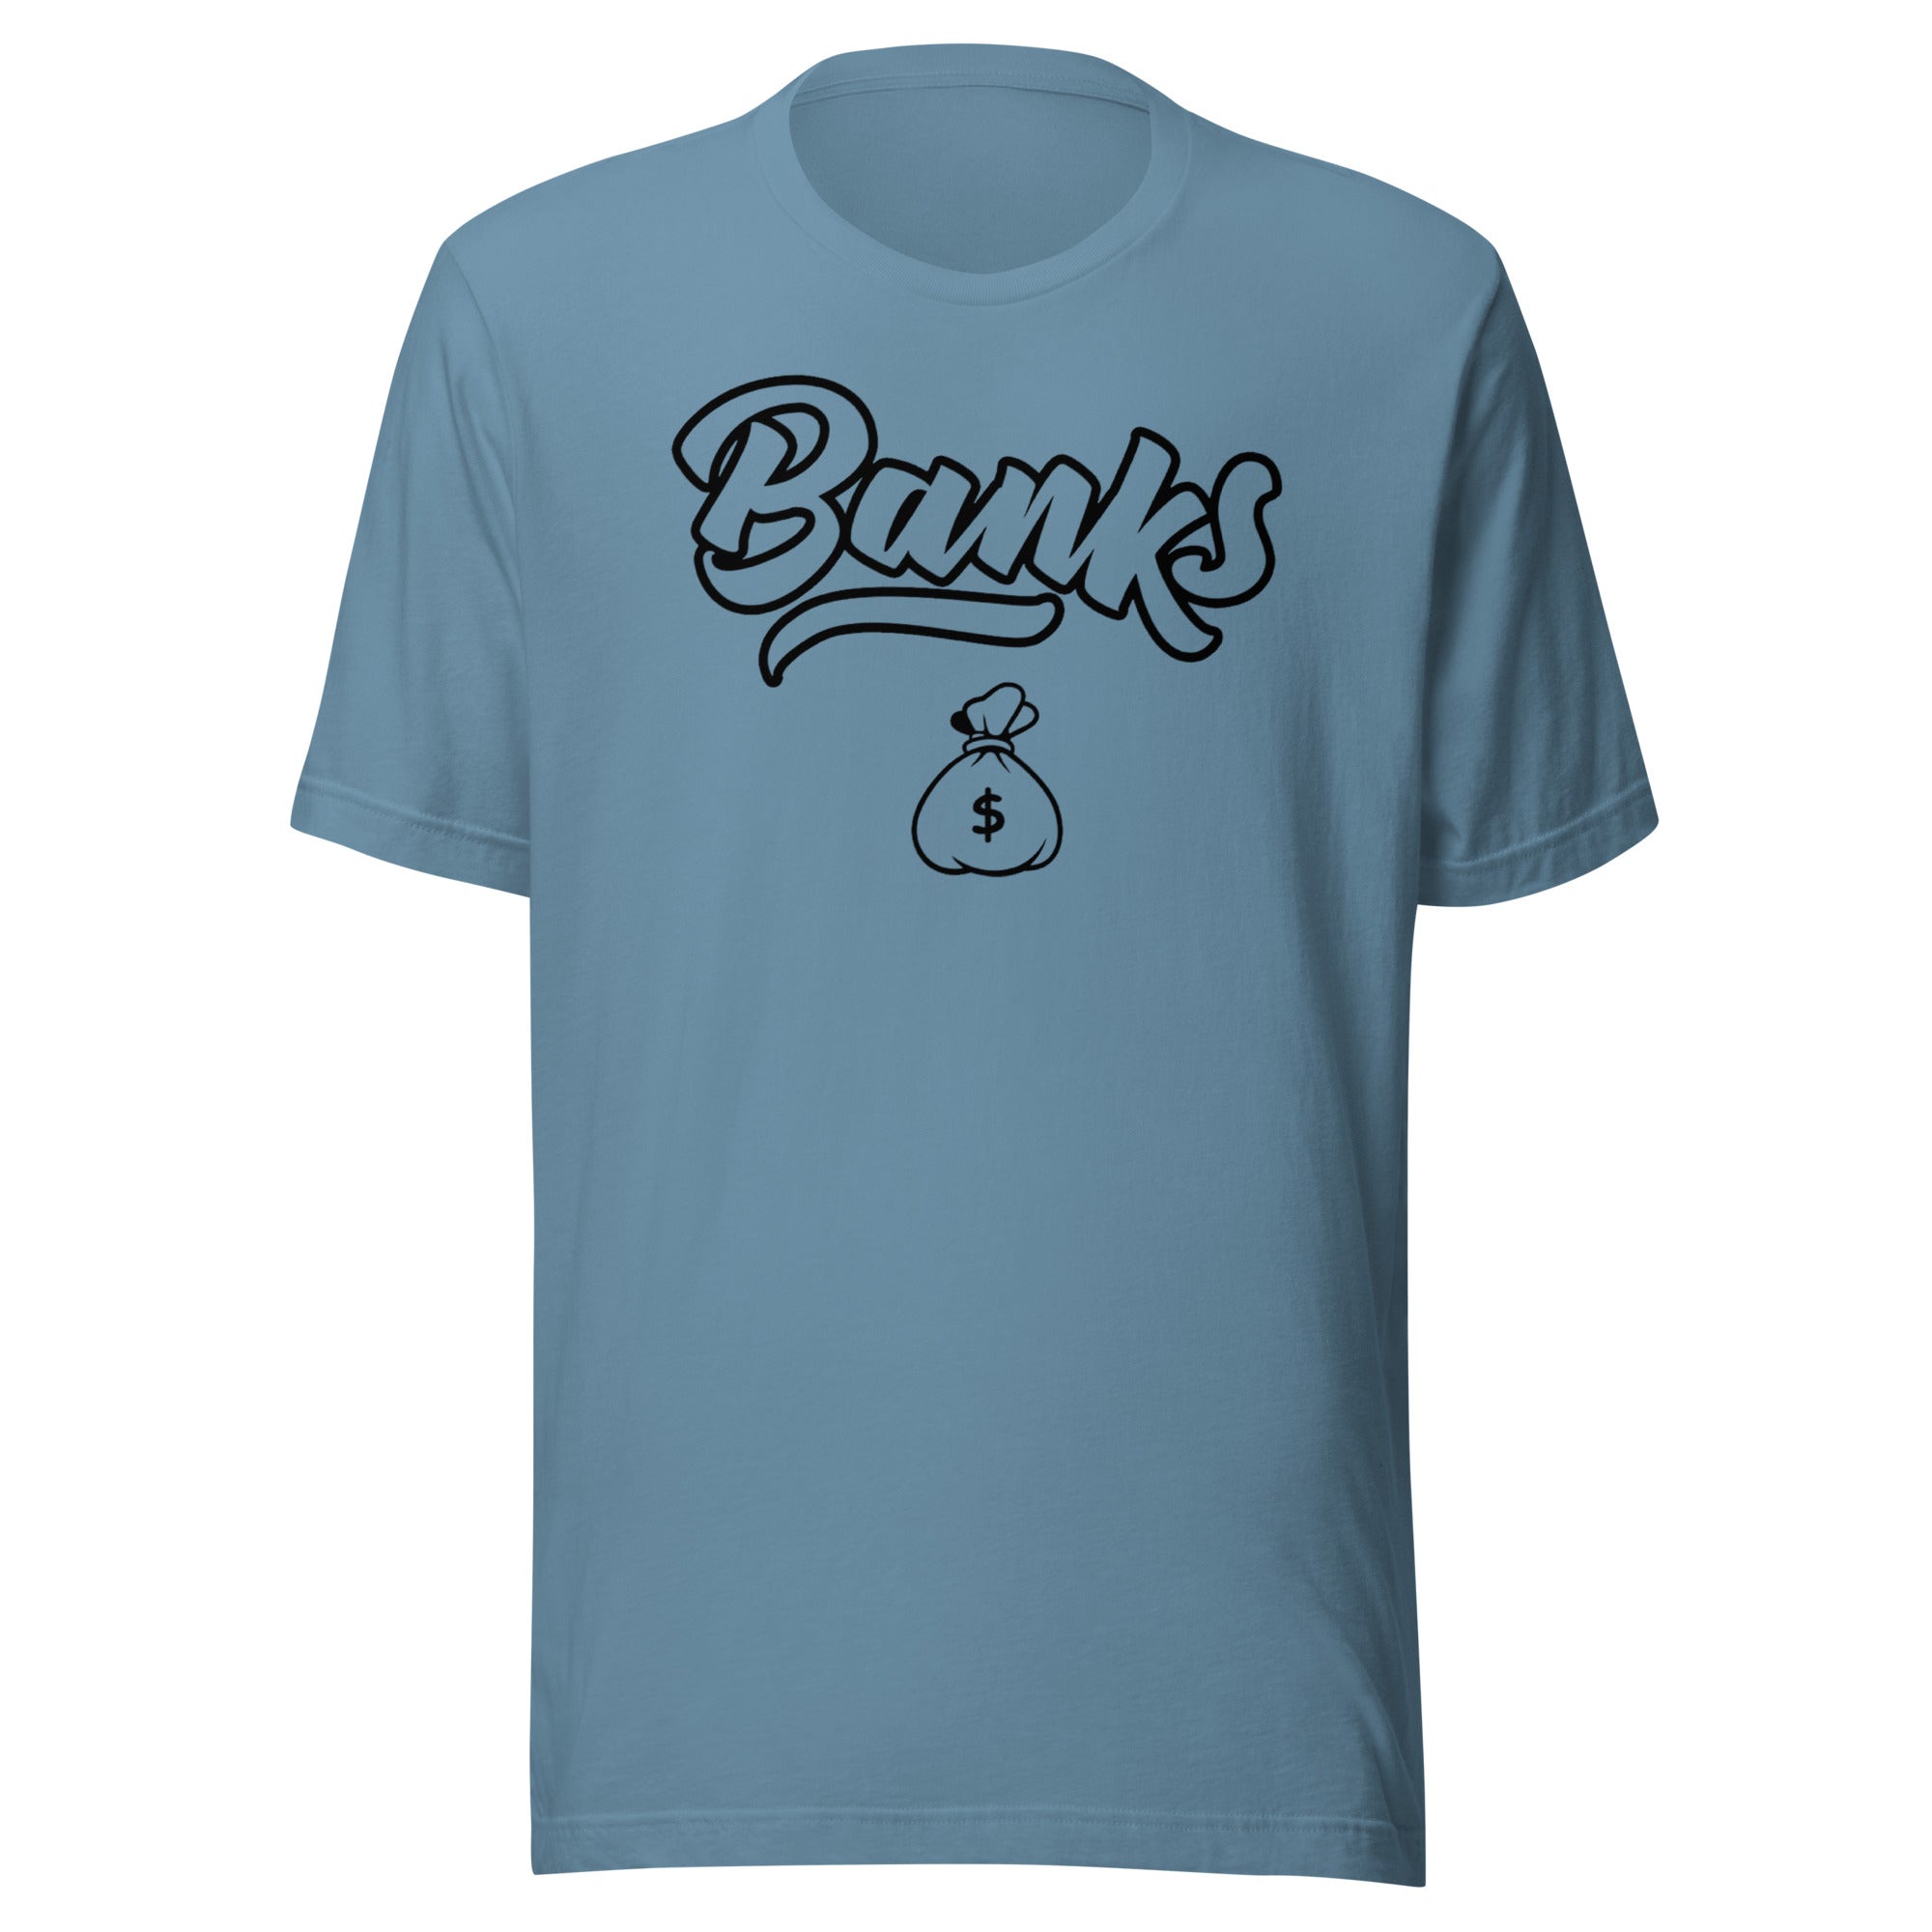 Banks 1433 - t-shirt